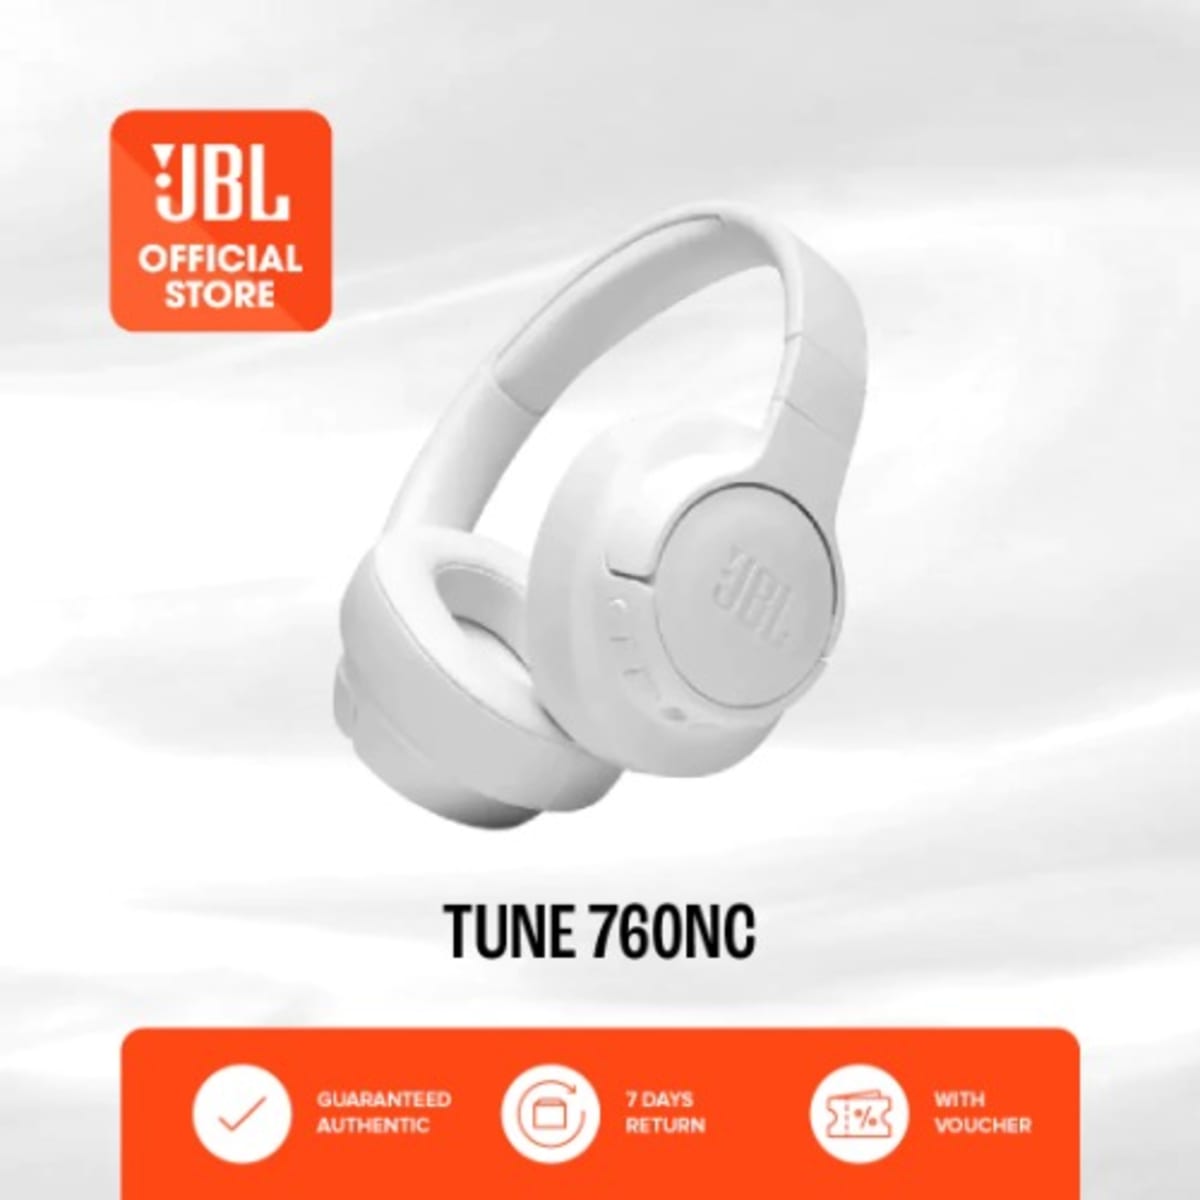 JBL Tune 760nc Wireless Headset - White